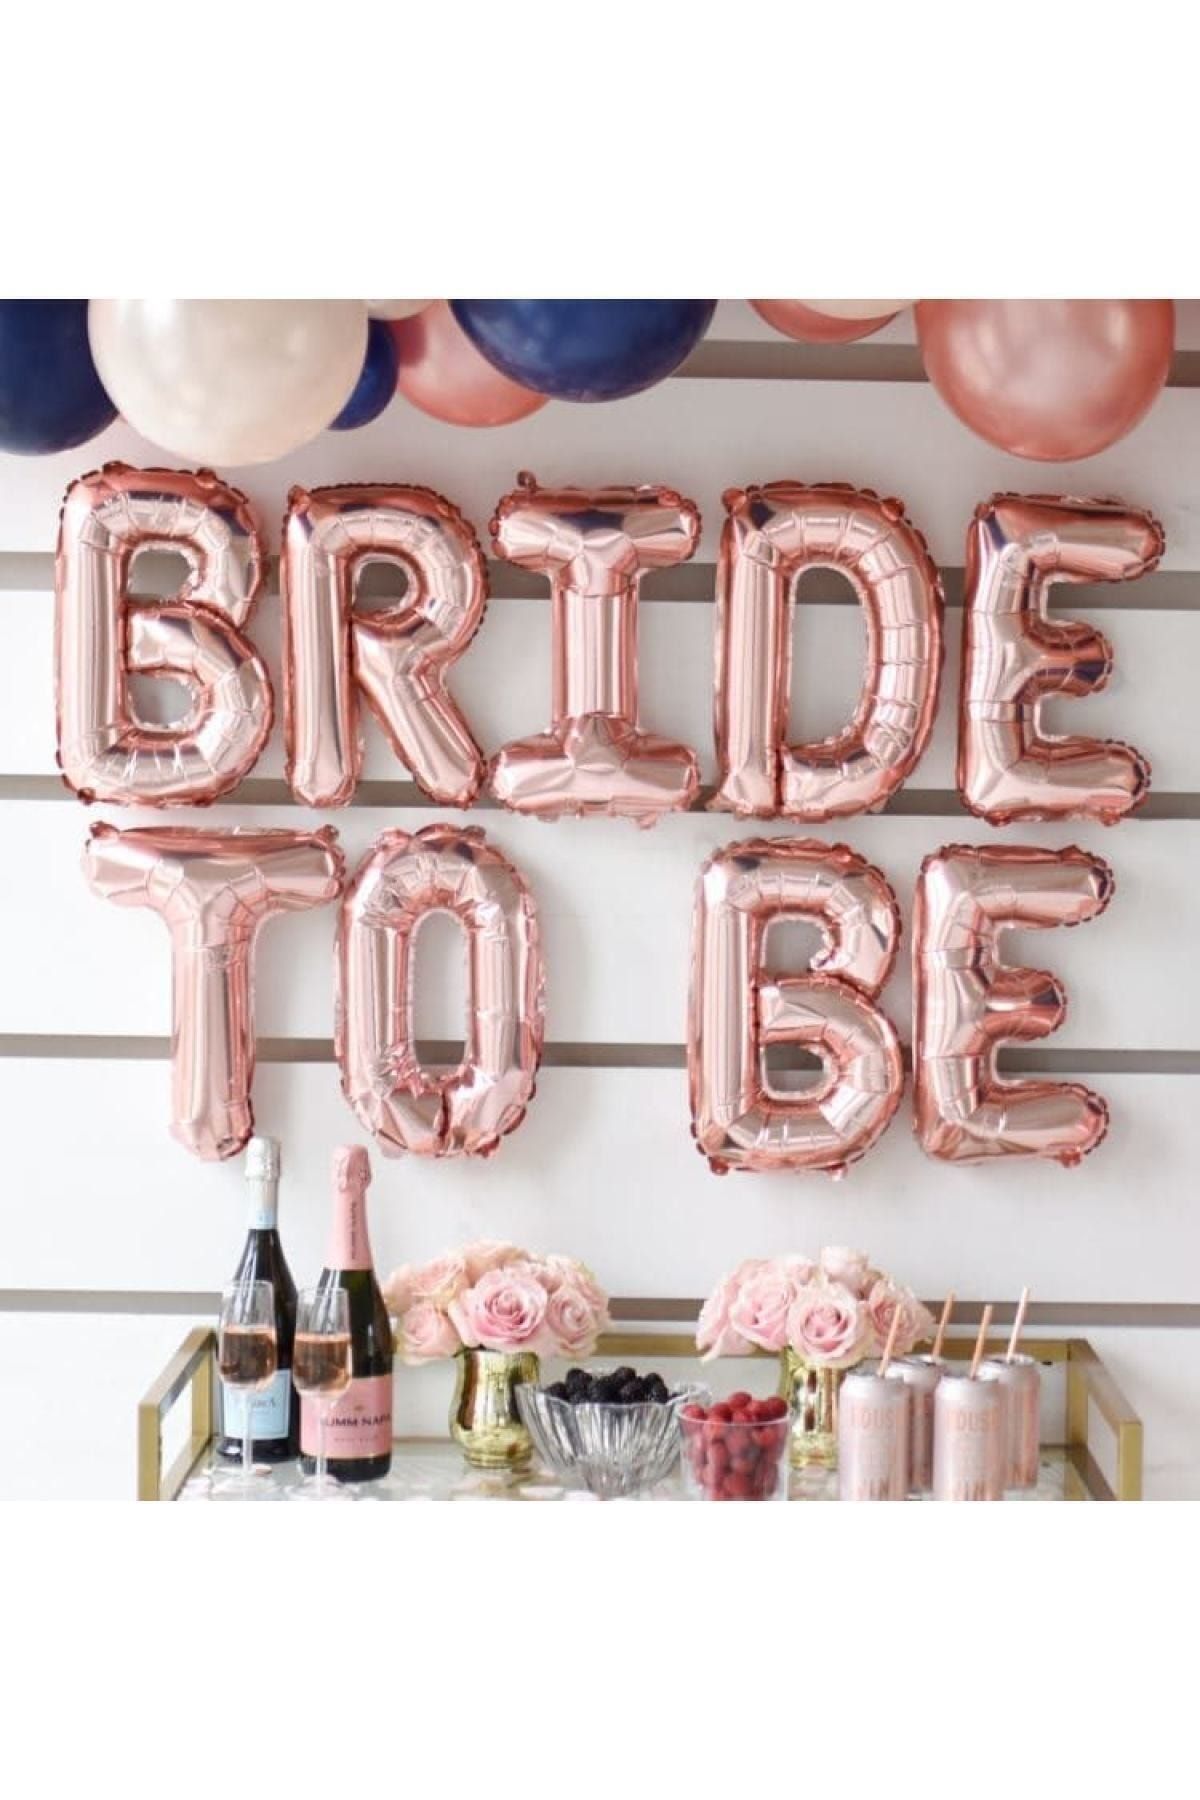 Huzur Party Store Bride To Be Yazılı Folyo Balon Konsepti Rose Gold Renkli Bekarlığa Veda Partisi Büyük Balon Seti